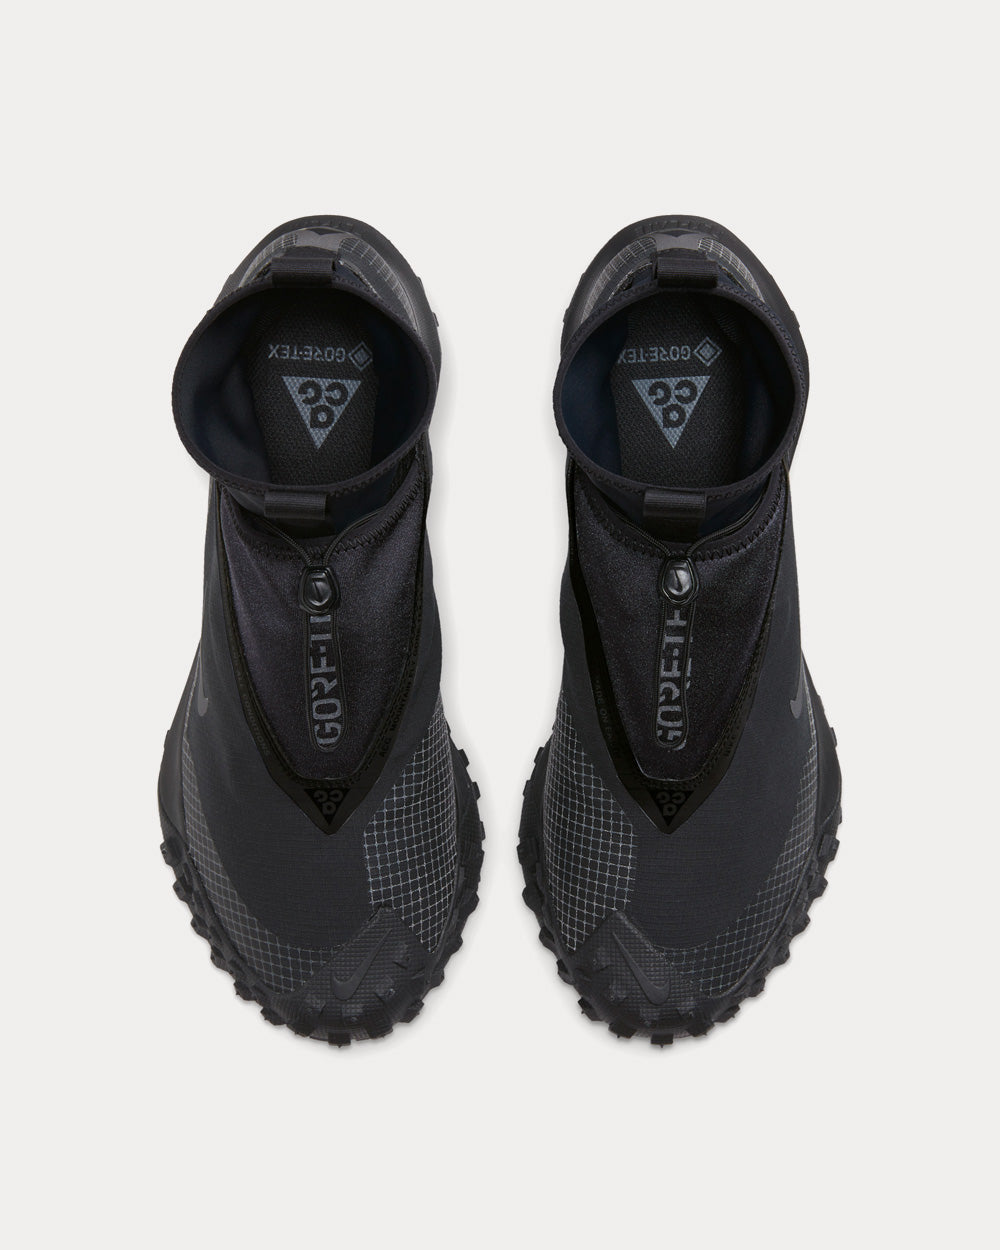 Nike - ACG Mountain Fly GORE-TEX Black / Dark Grey High Top Sneakers